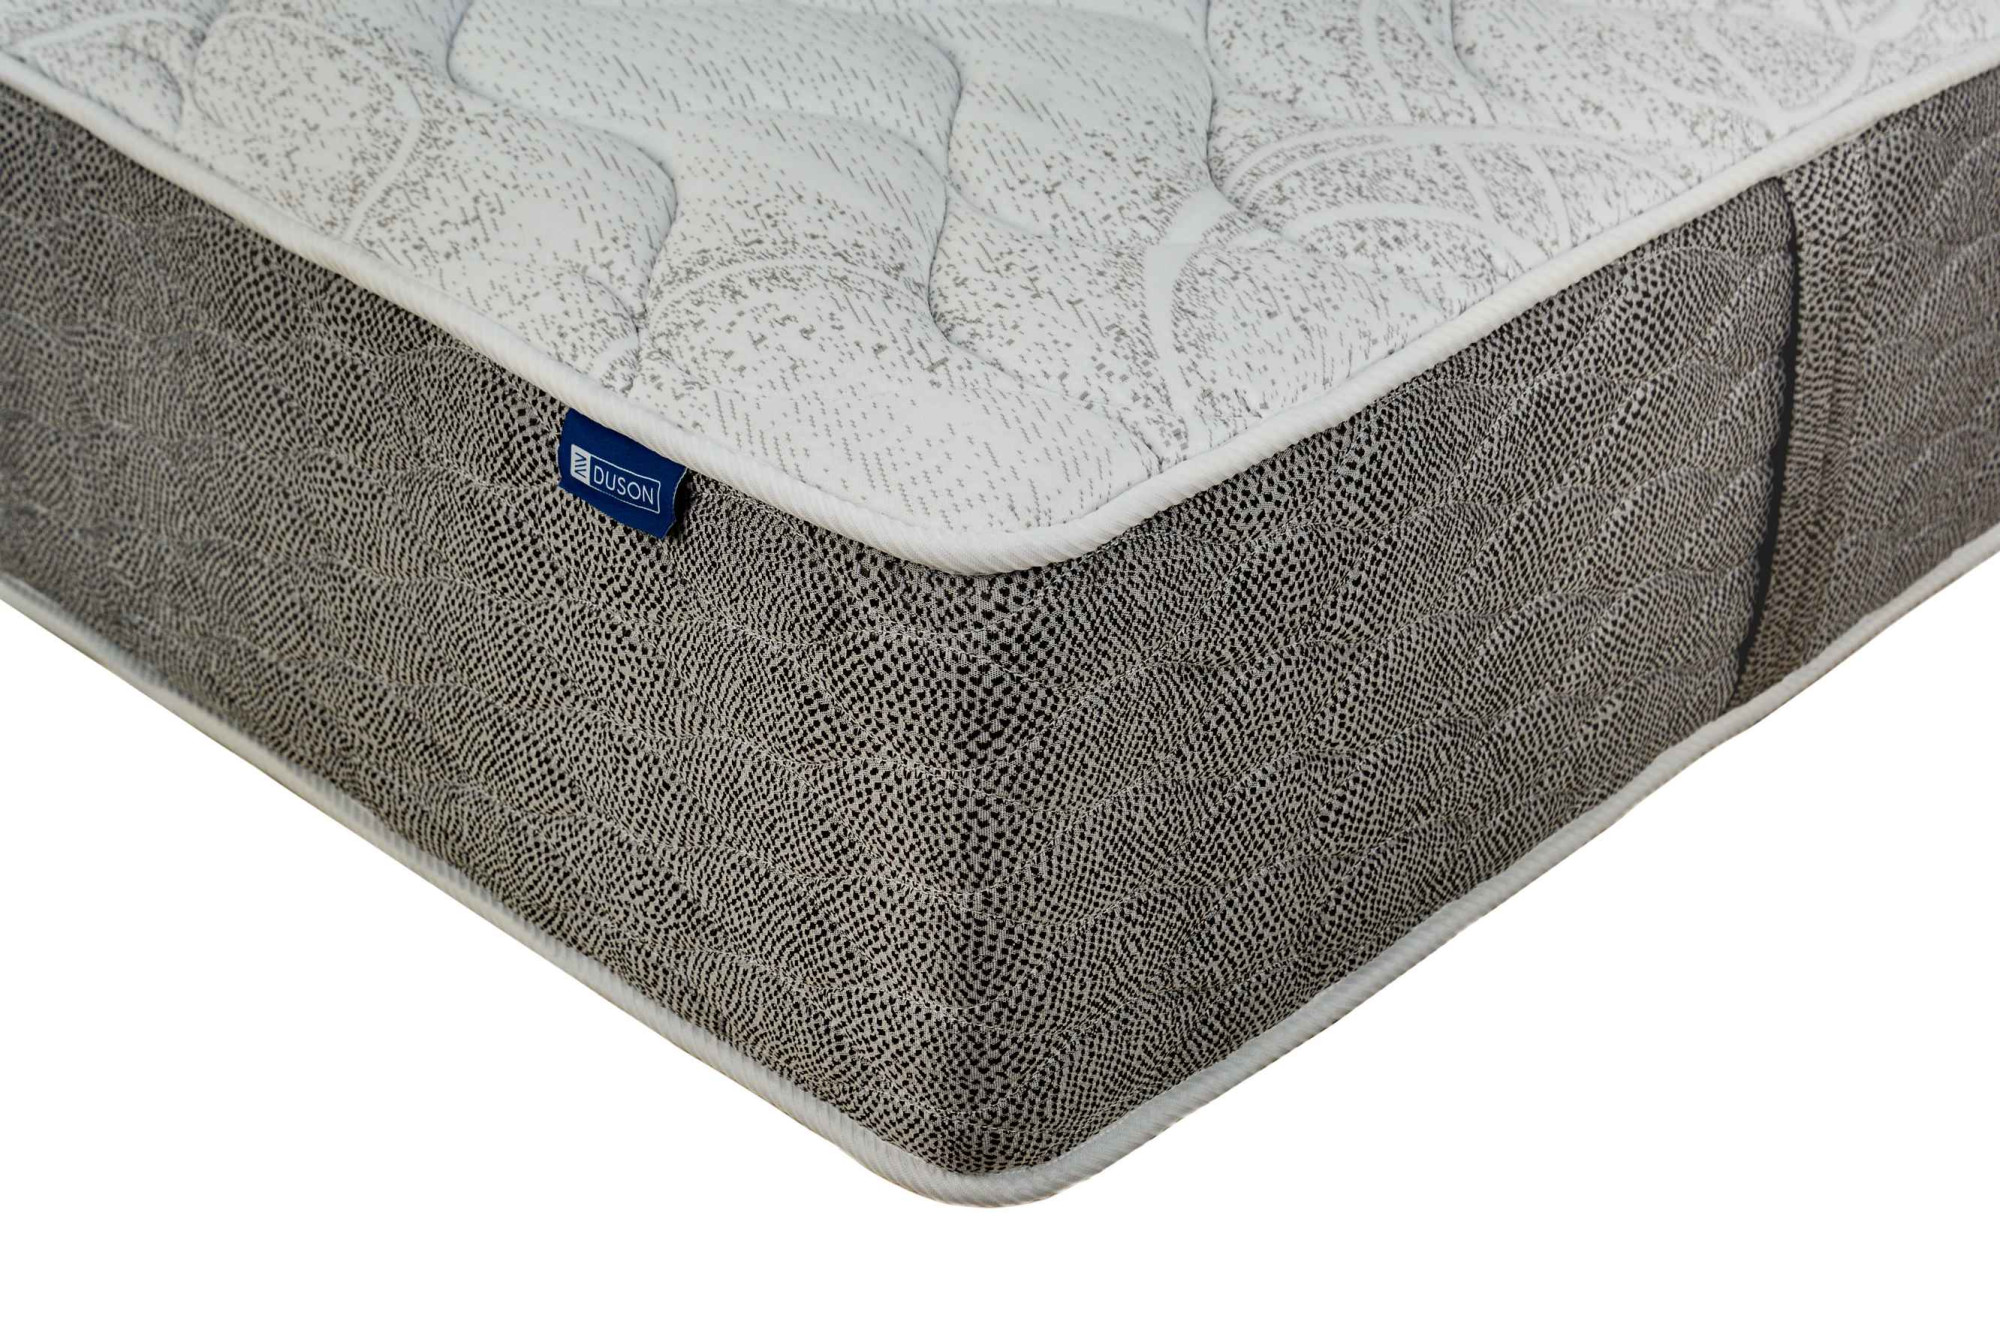 Orthopedic mattress Texas One-sided 120x190 hard, 25cm